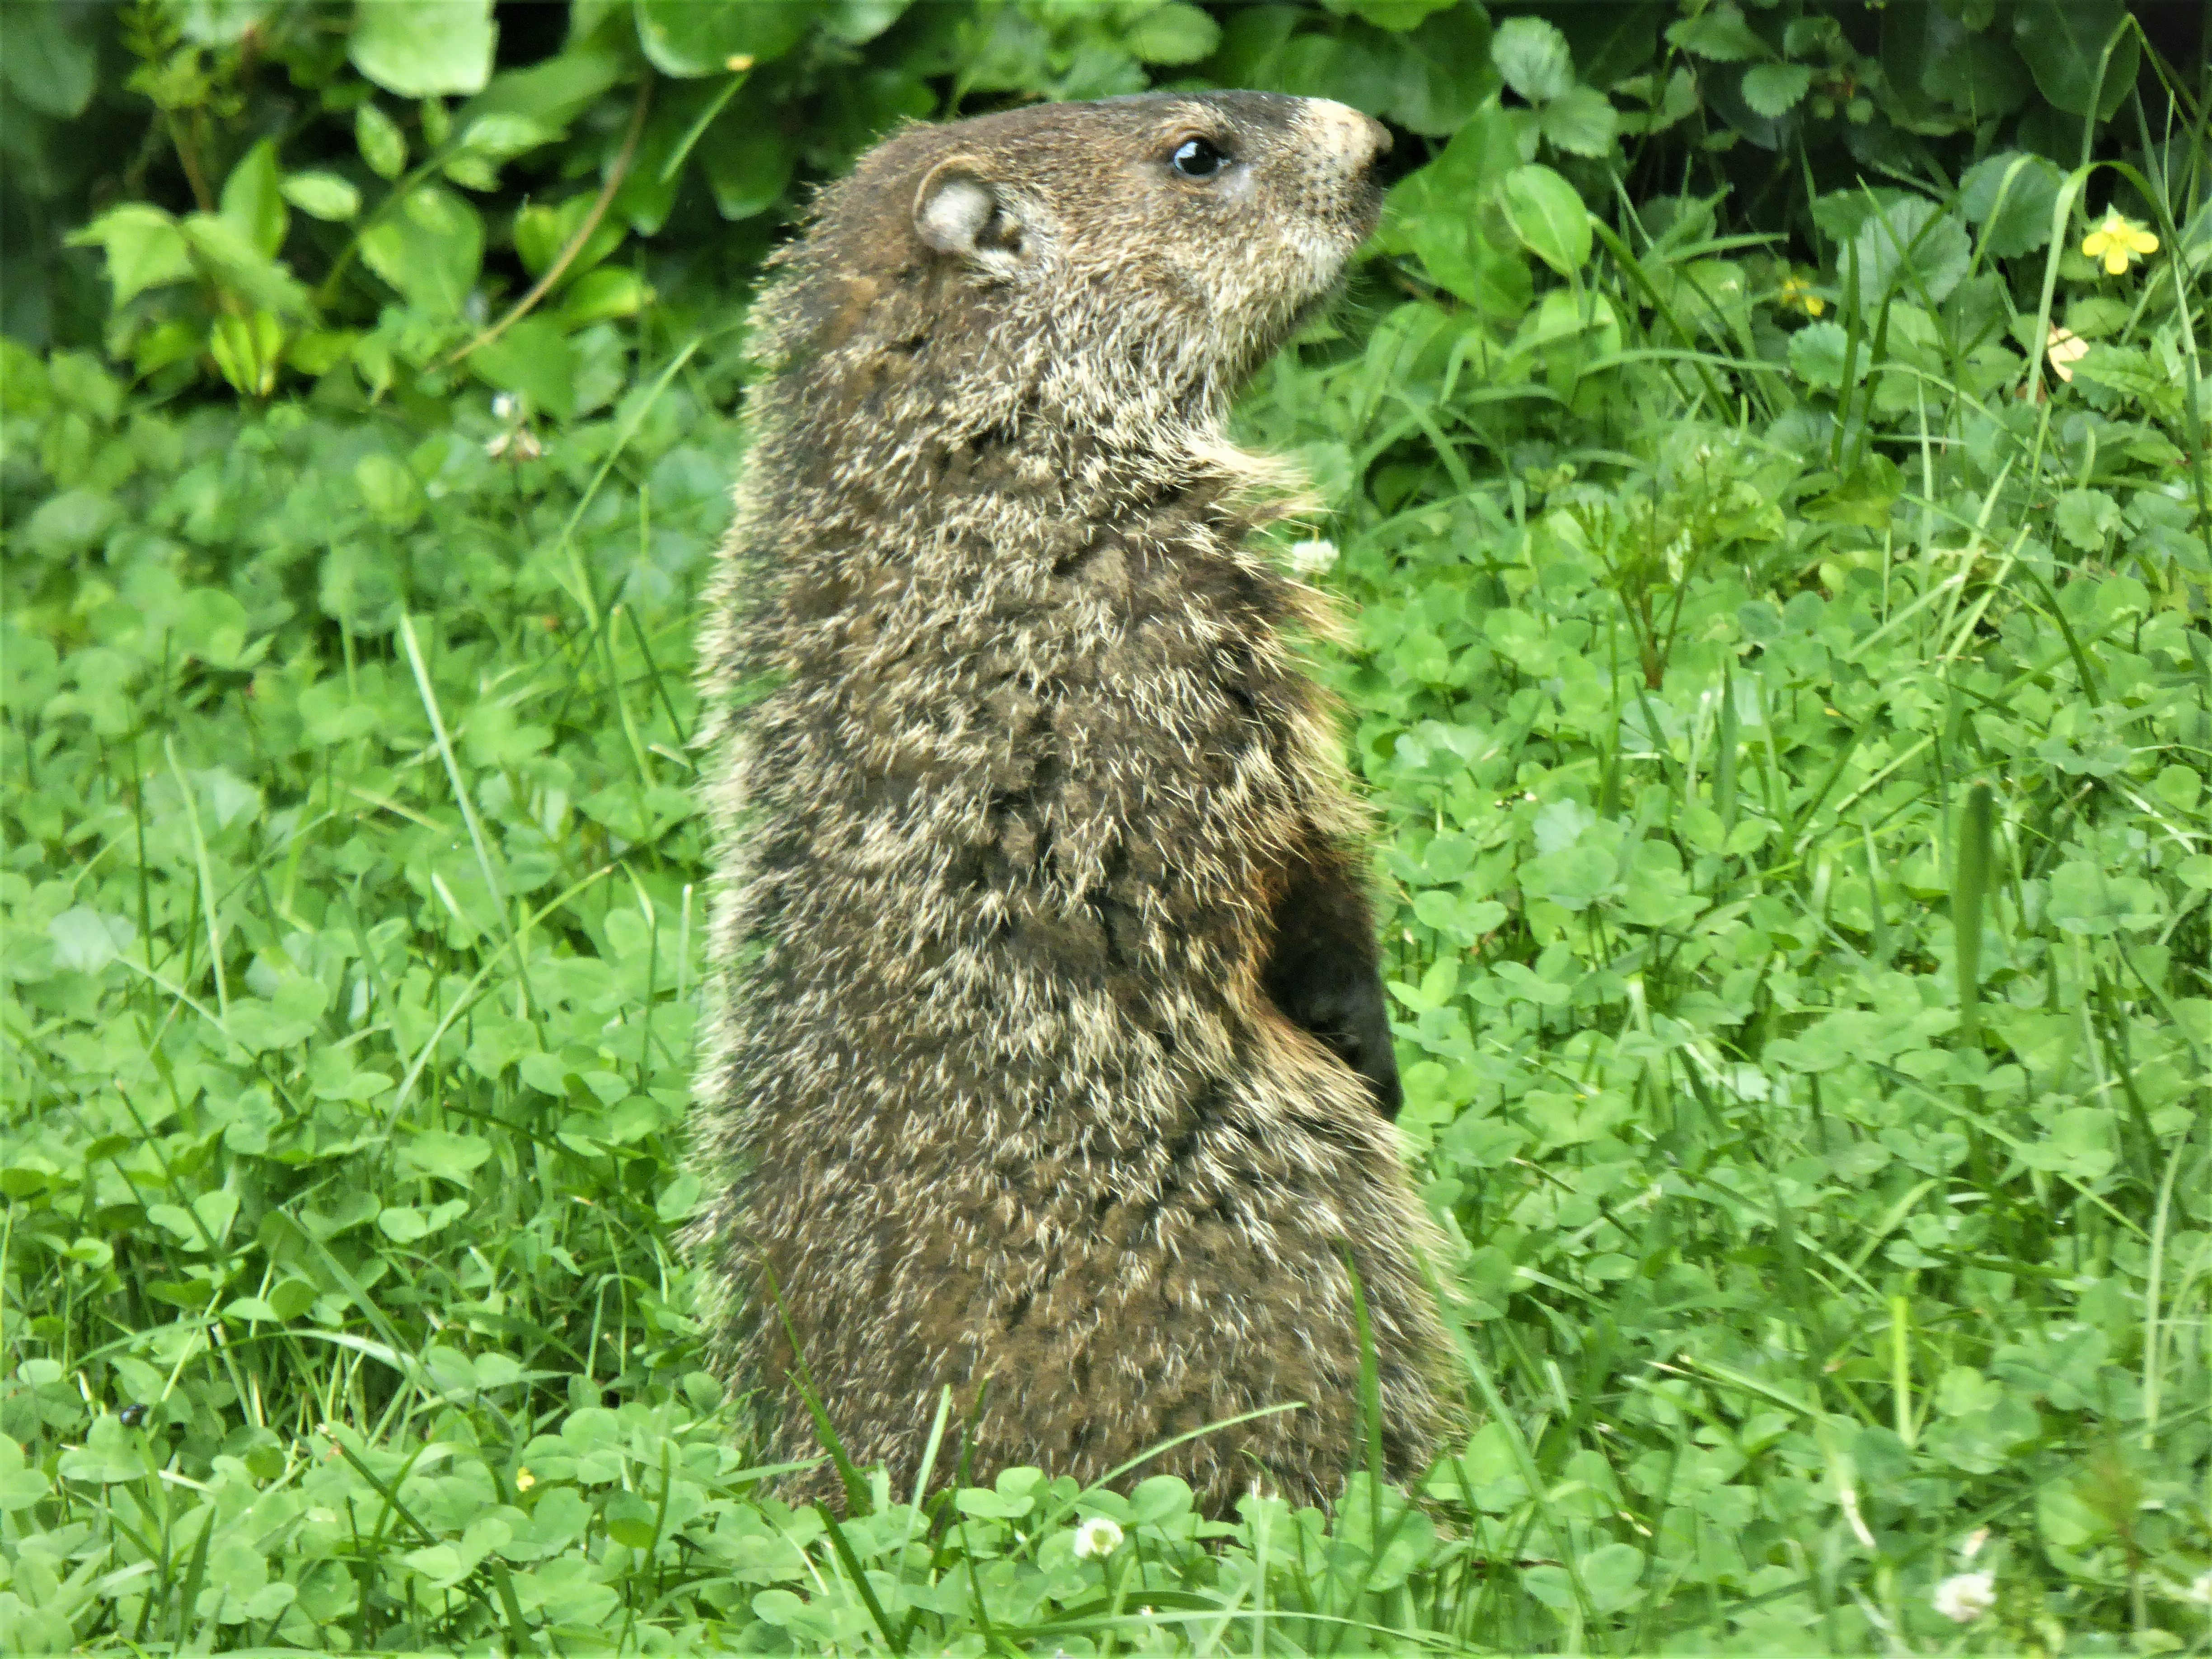 Gretel teh groundhog standing on the lush lawn